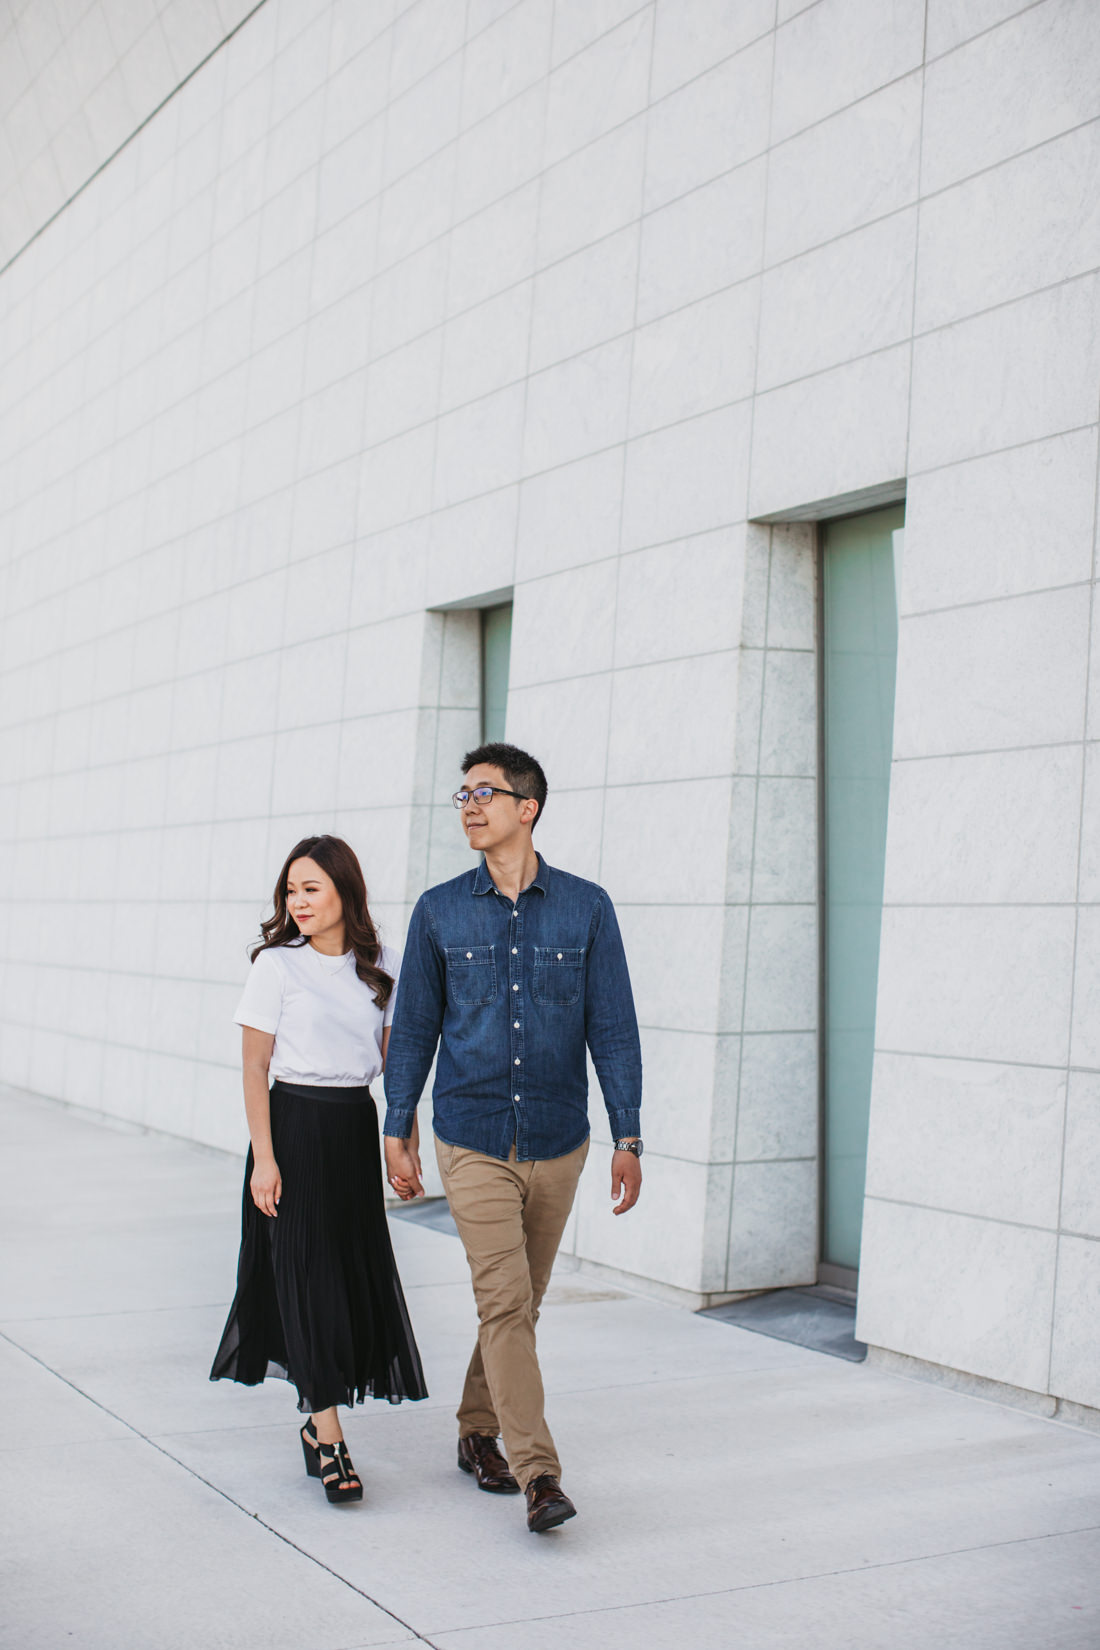 Couple Walking outside modern building | Aga Khan Museum engagement | Minimalist portrait location | Toronto Wedding Photographer | EightyFifth Street Photography